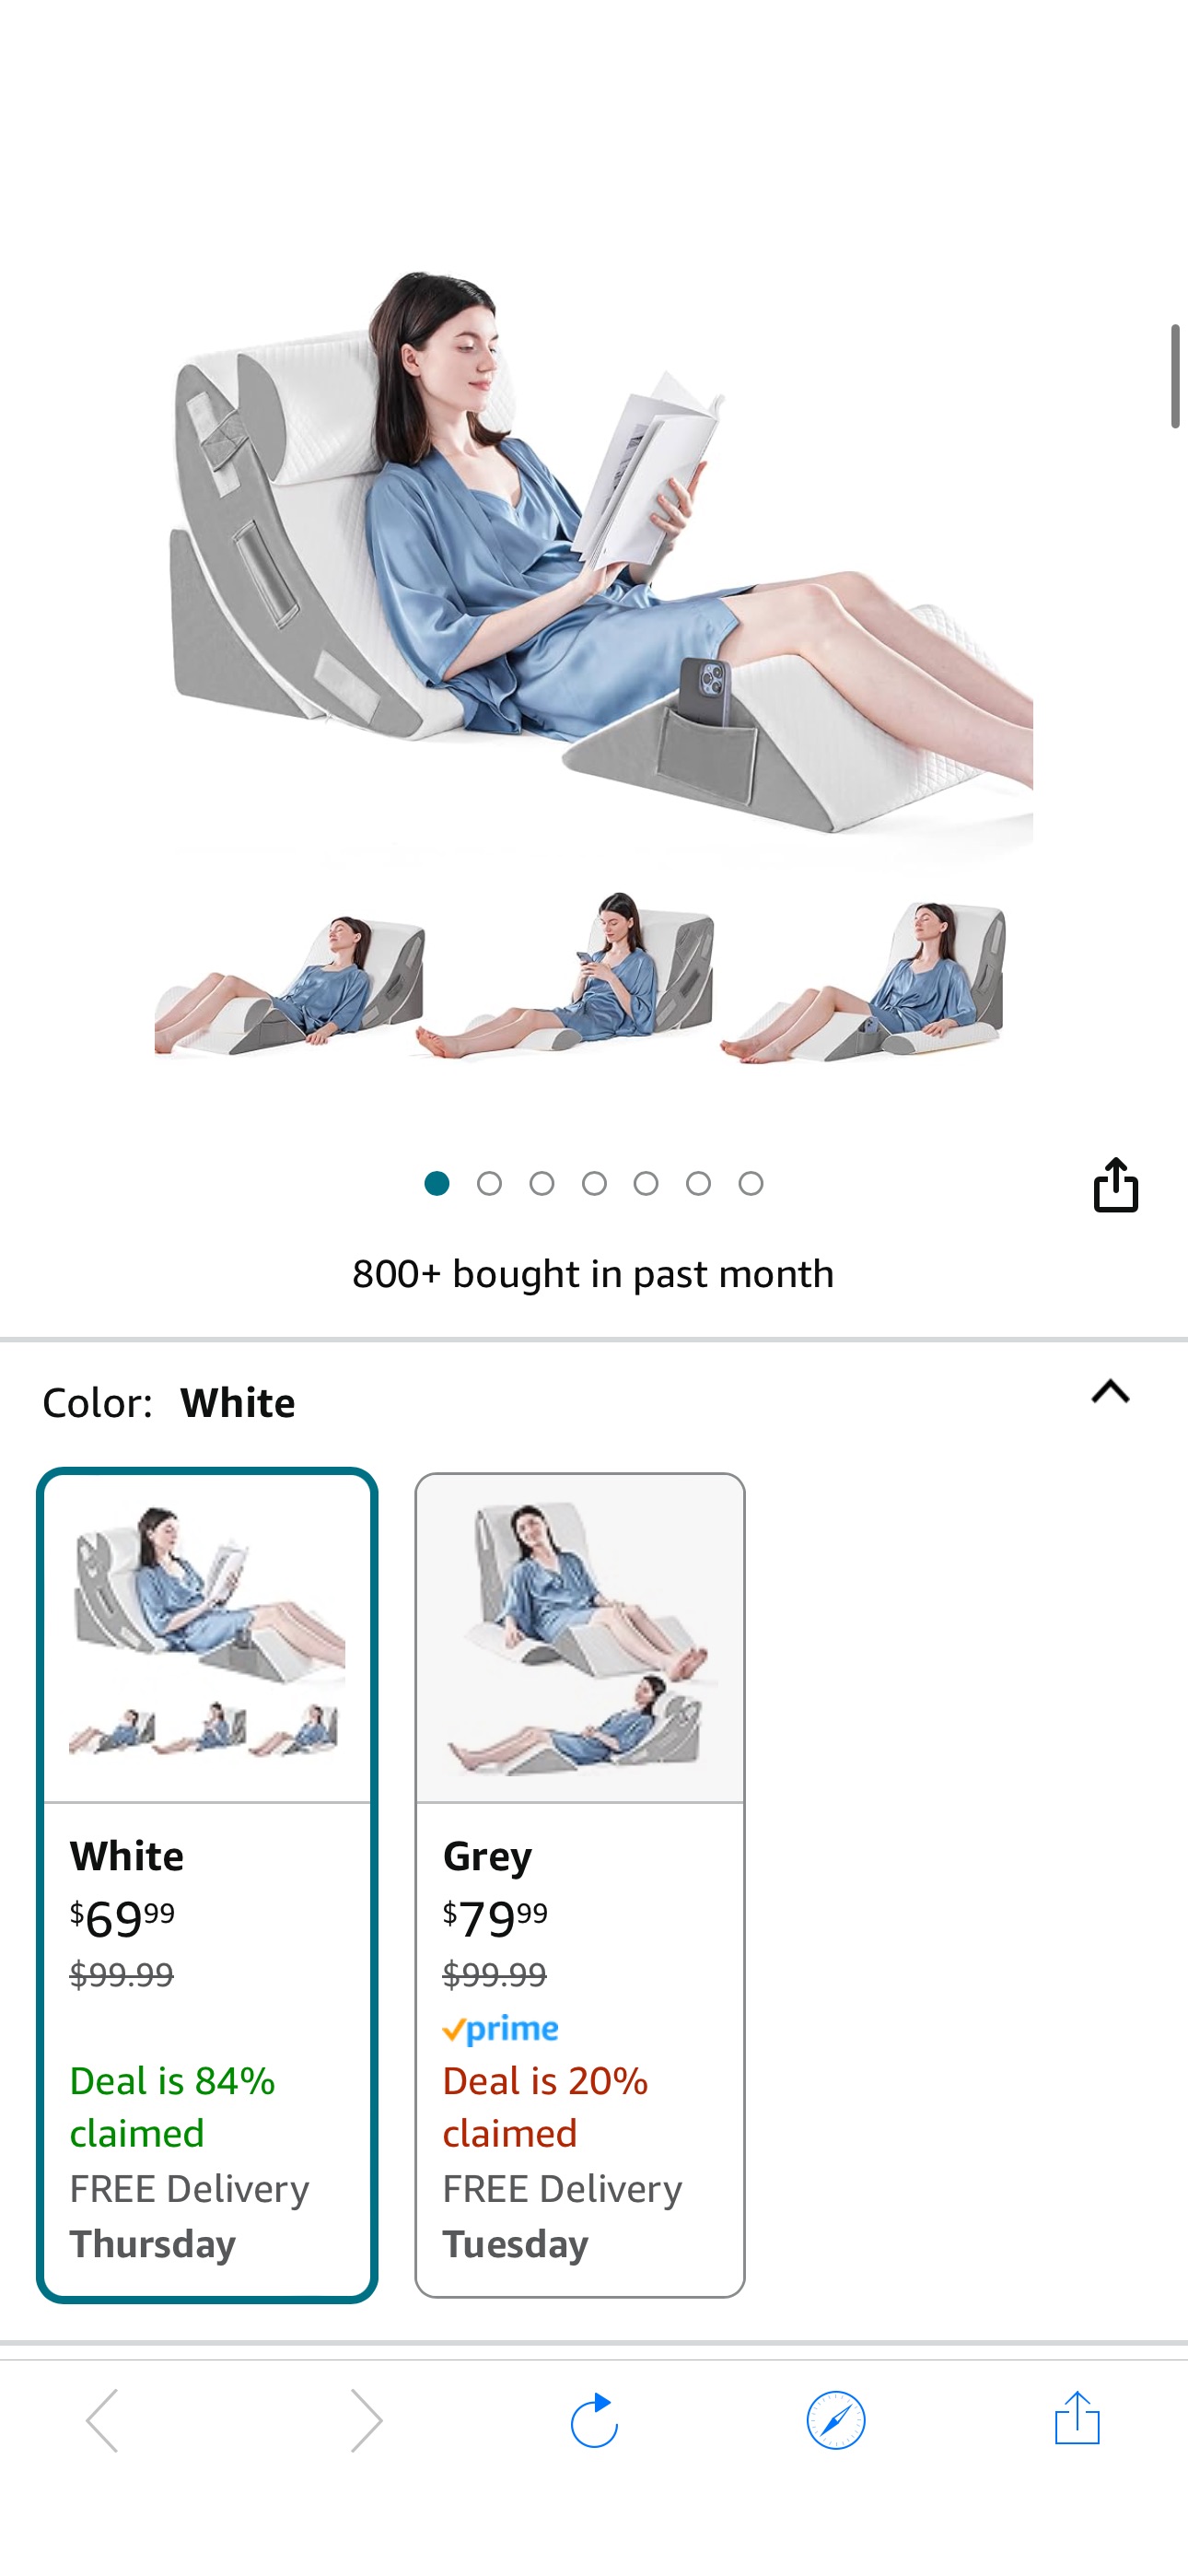 Amazon.com: $28.xx Reg. $99 4pcs Orthopedic Bed Wedge Pillow Set for Sleeping, Post Surgery

Clip Ld and code CD2VGTC5